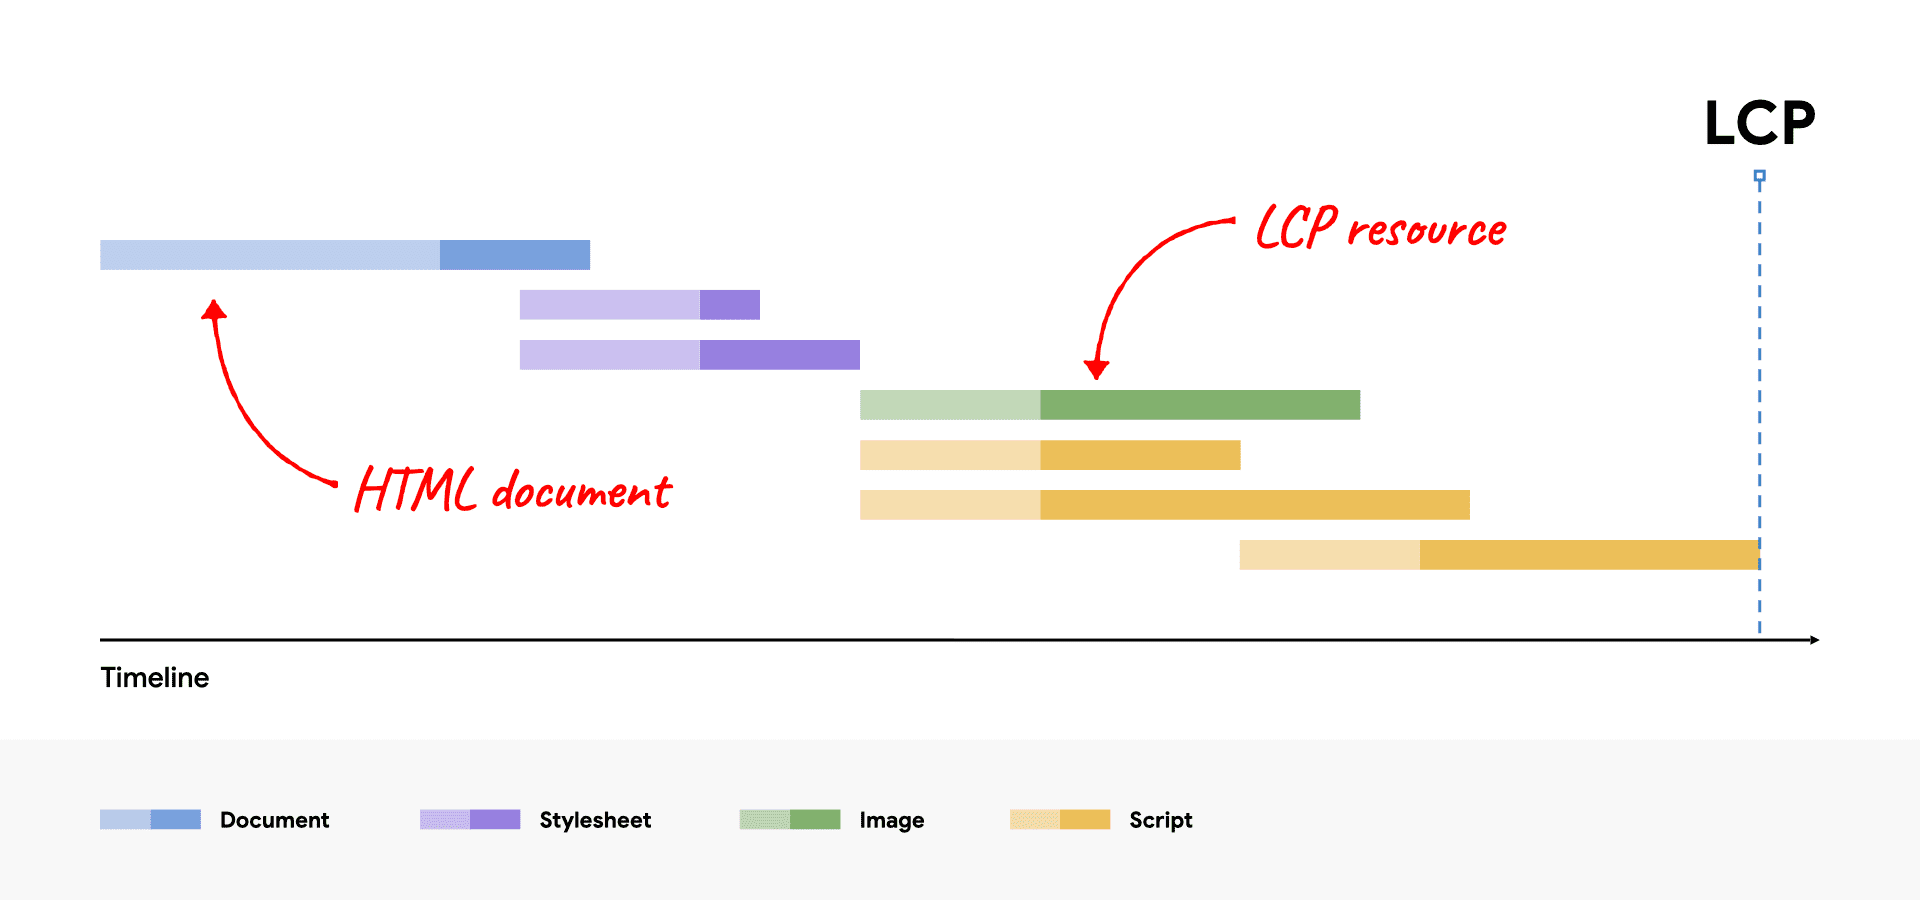 HTML 및 LCP 리소스가 강조표시된 네트워크 폭포식 구조